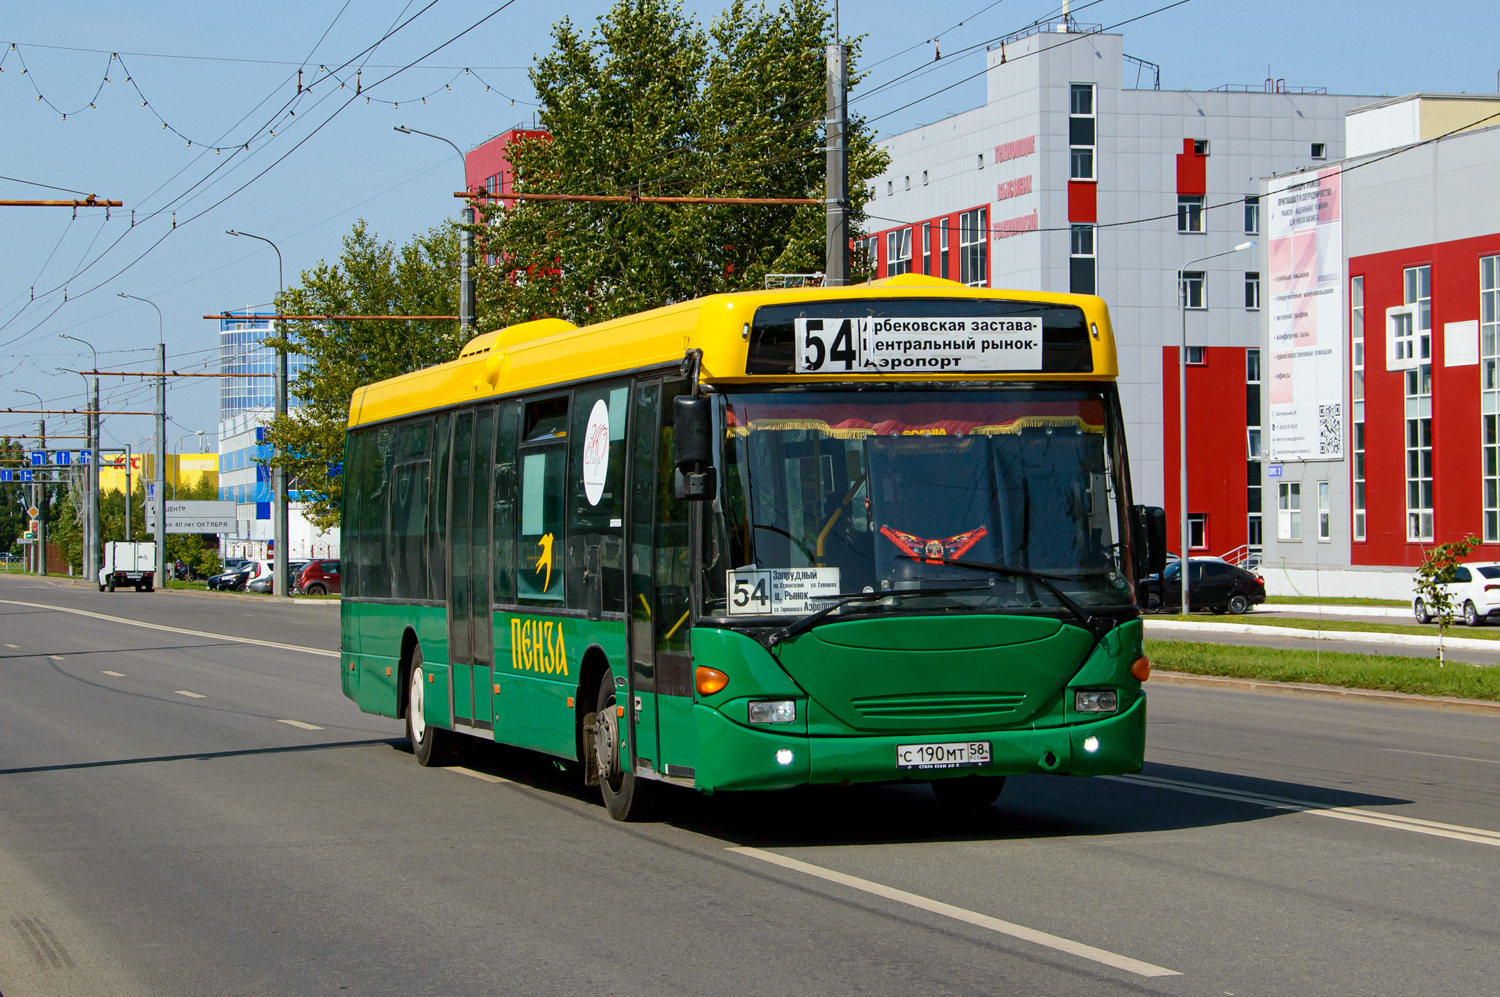 Penzai terület, Scania OmniLink I (Scania-St.Petersburg) sz.: С 190 МТ 58